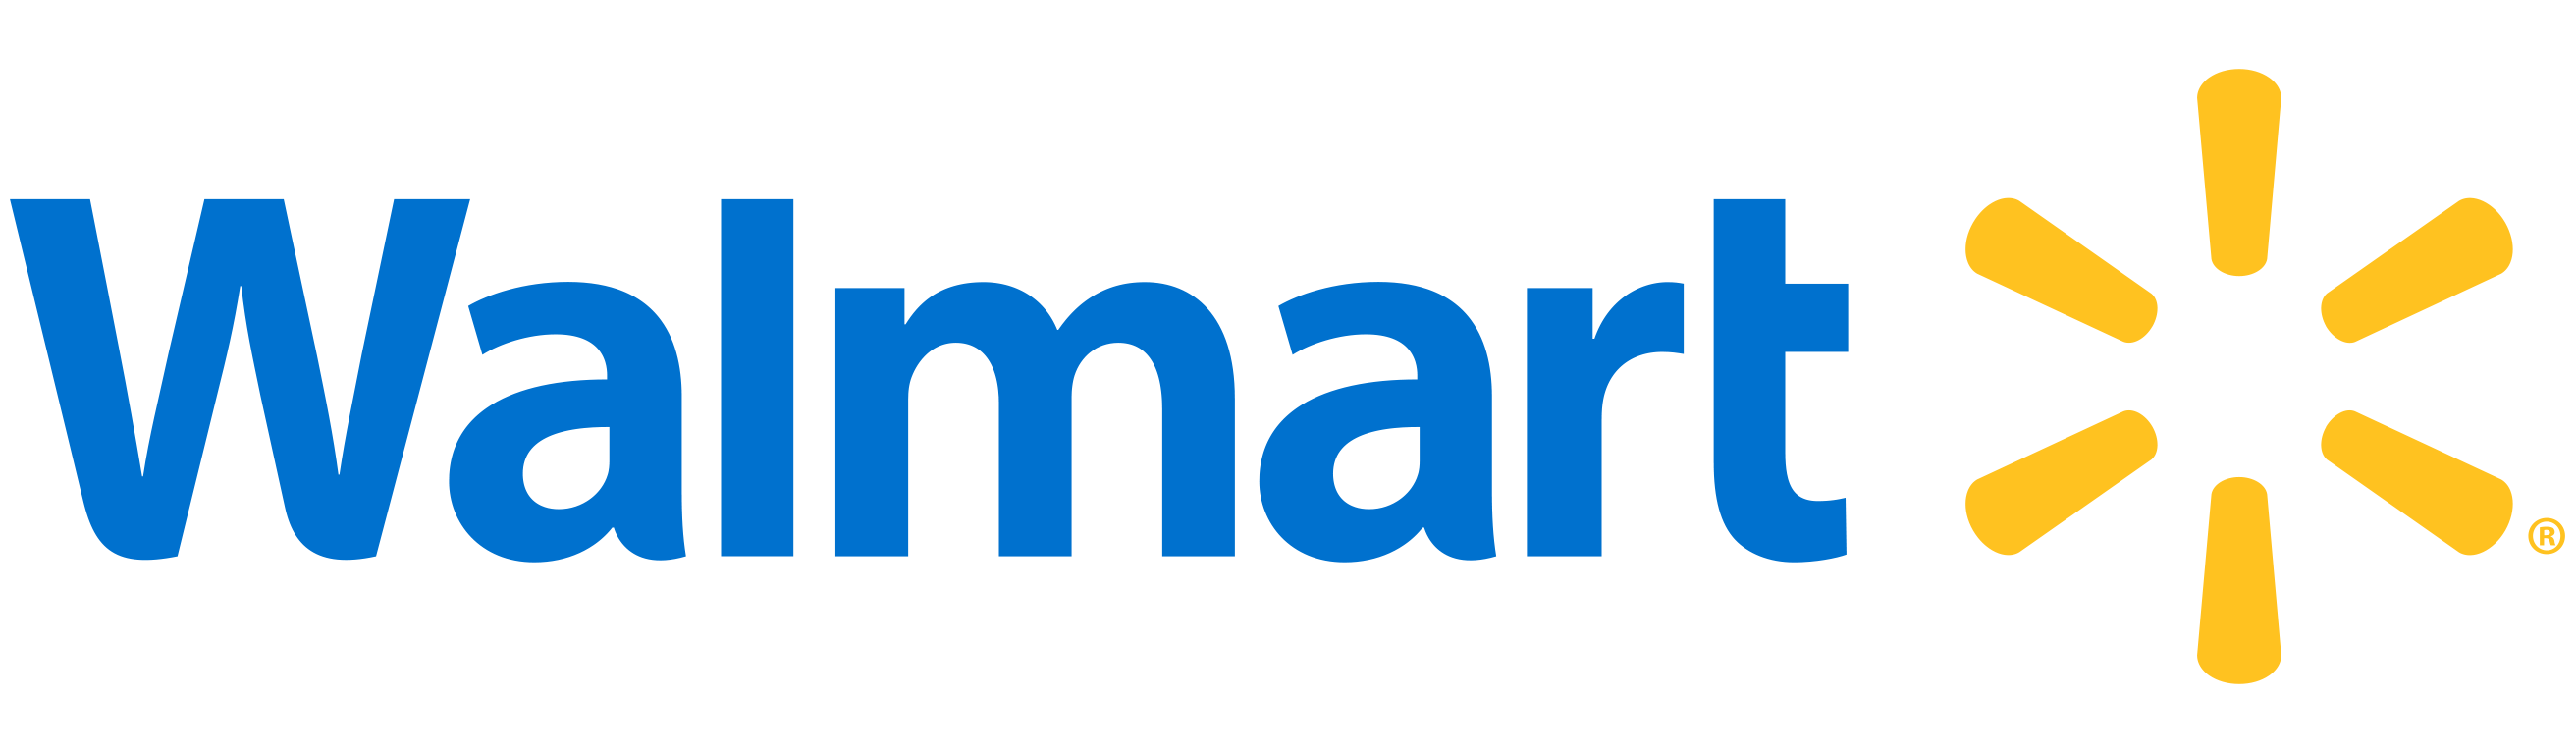 Wallmart-Logo